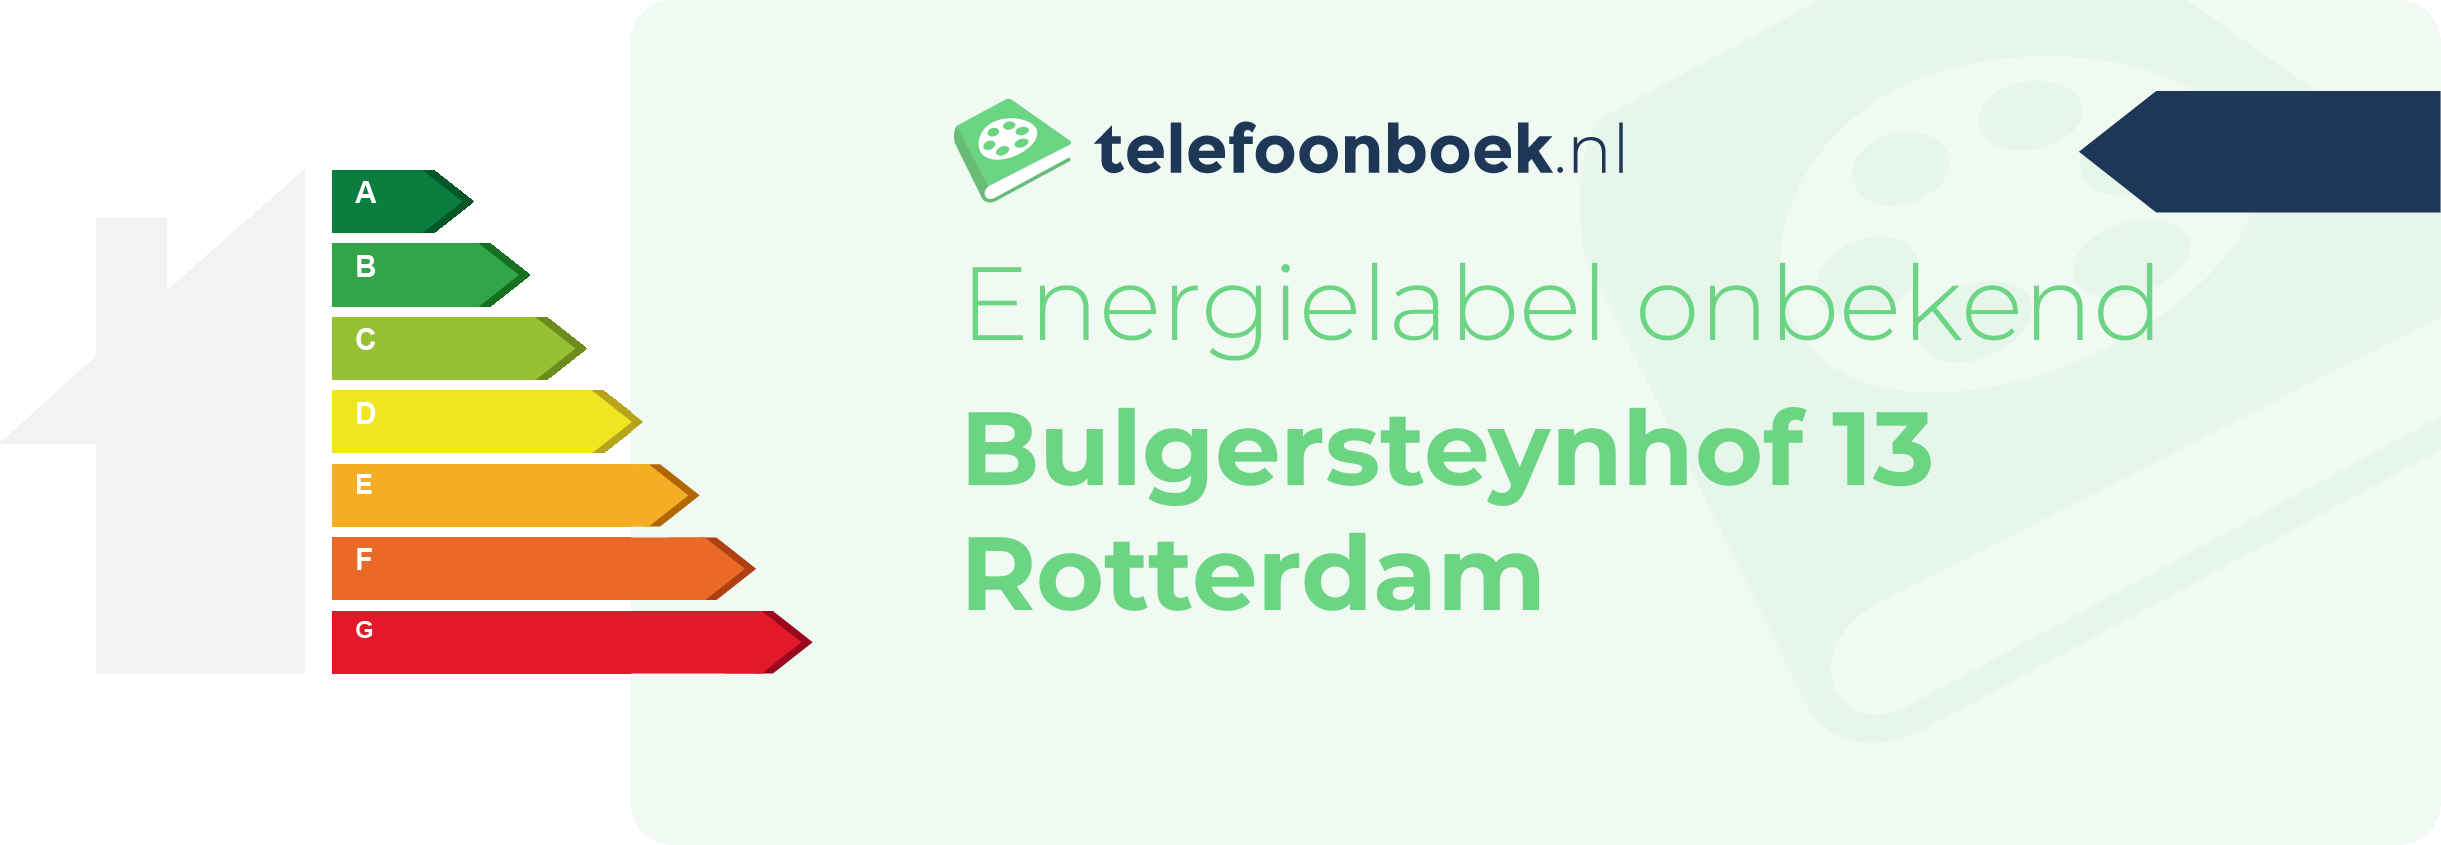 Energielabel Bulgersteynhof 13 Rotterdam